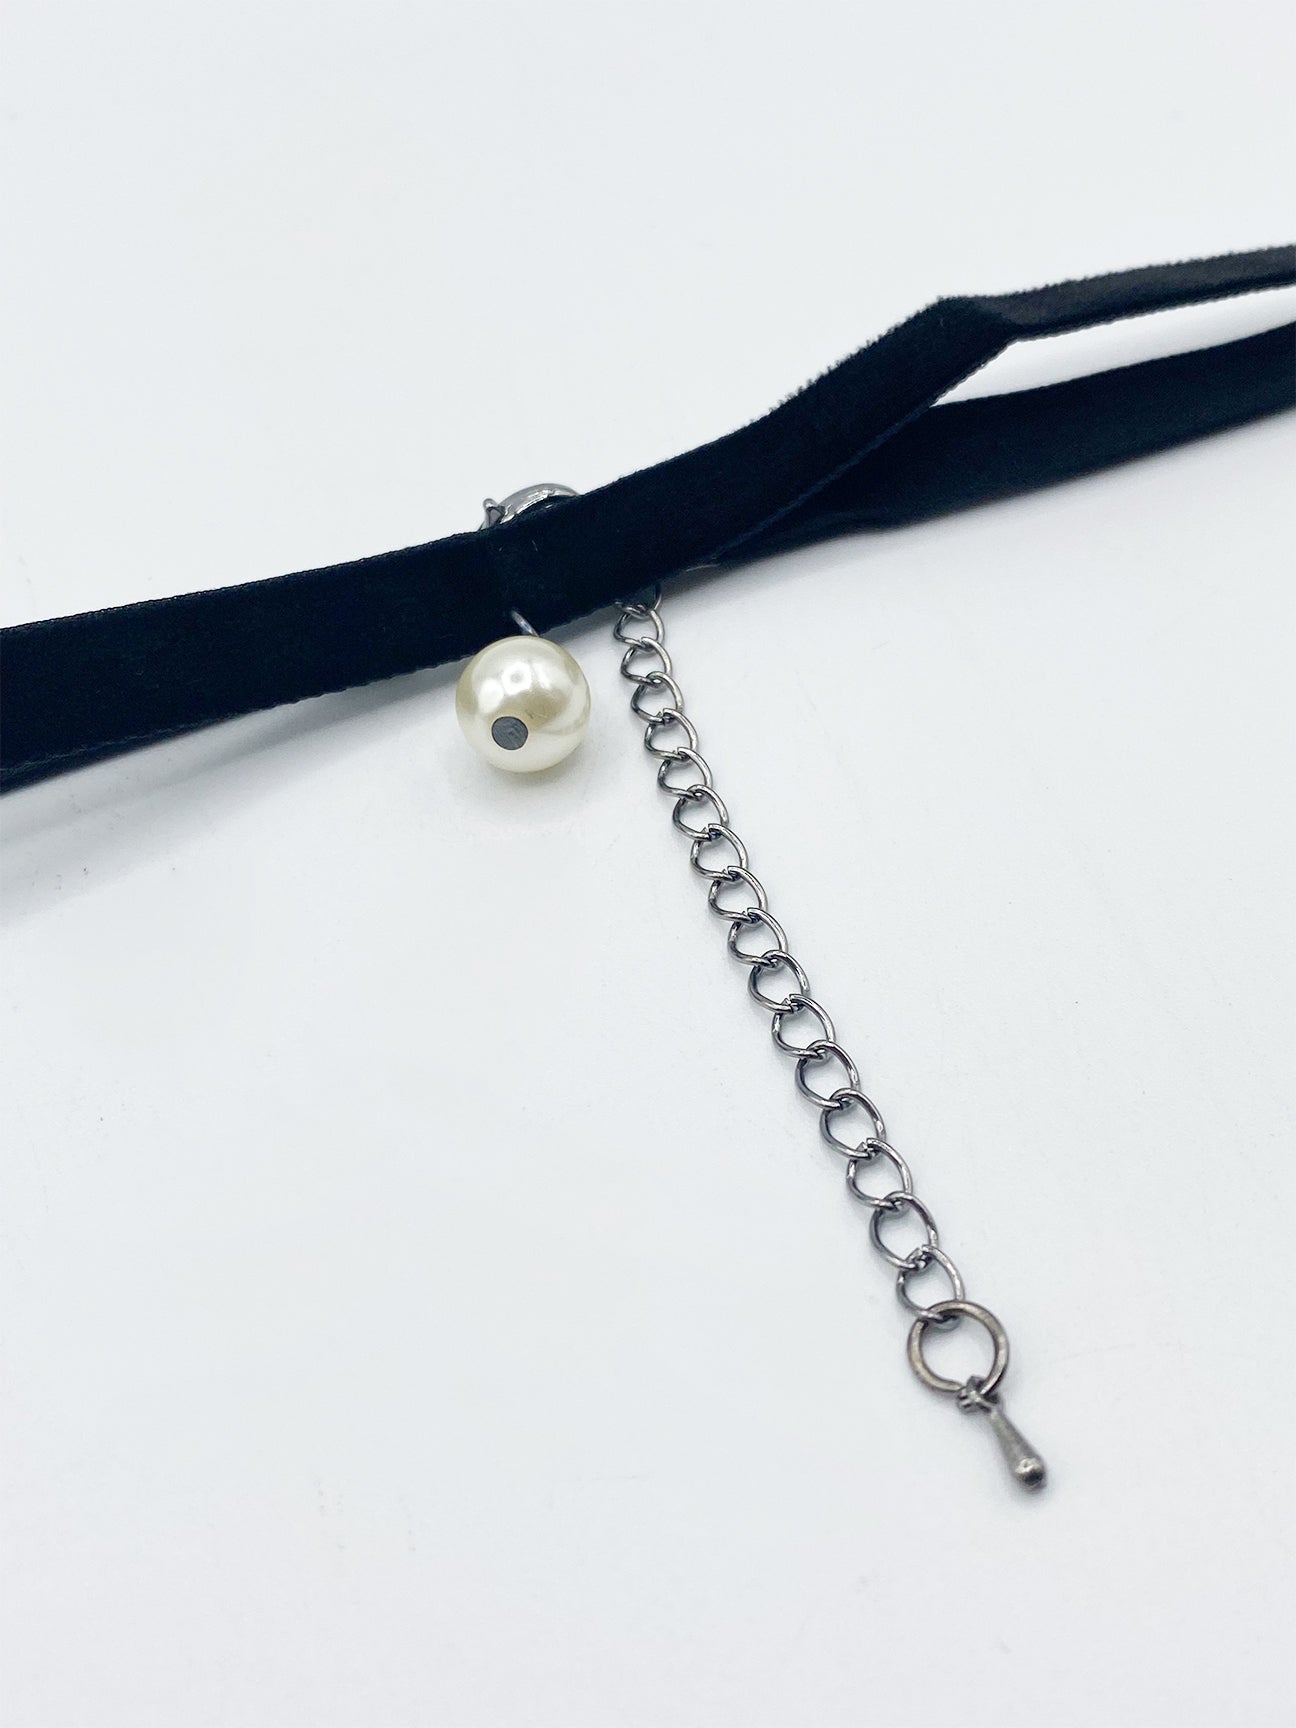 Black Faux Velvet Choker Necklace With Faux Pearl Charm